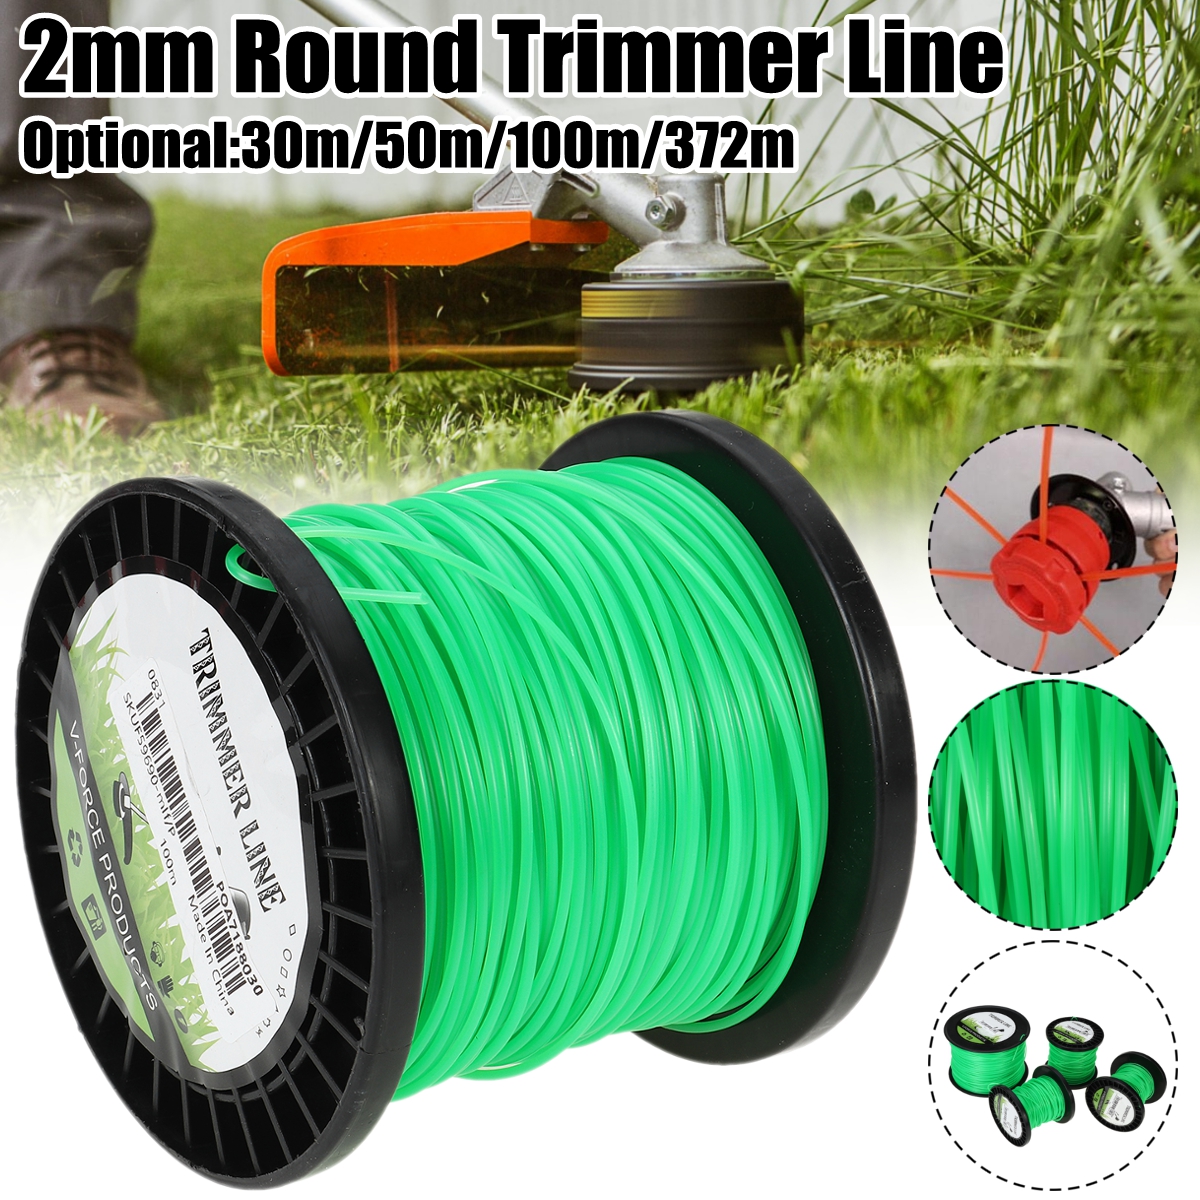 2mm-3050100372m-Nylon-Round-Trimmer-Strimmer-Line-Brushcutter-Cord-Rope-1947827-1